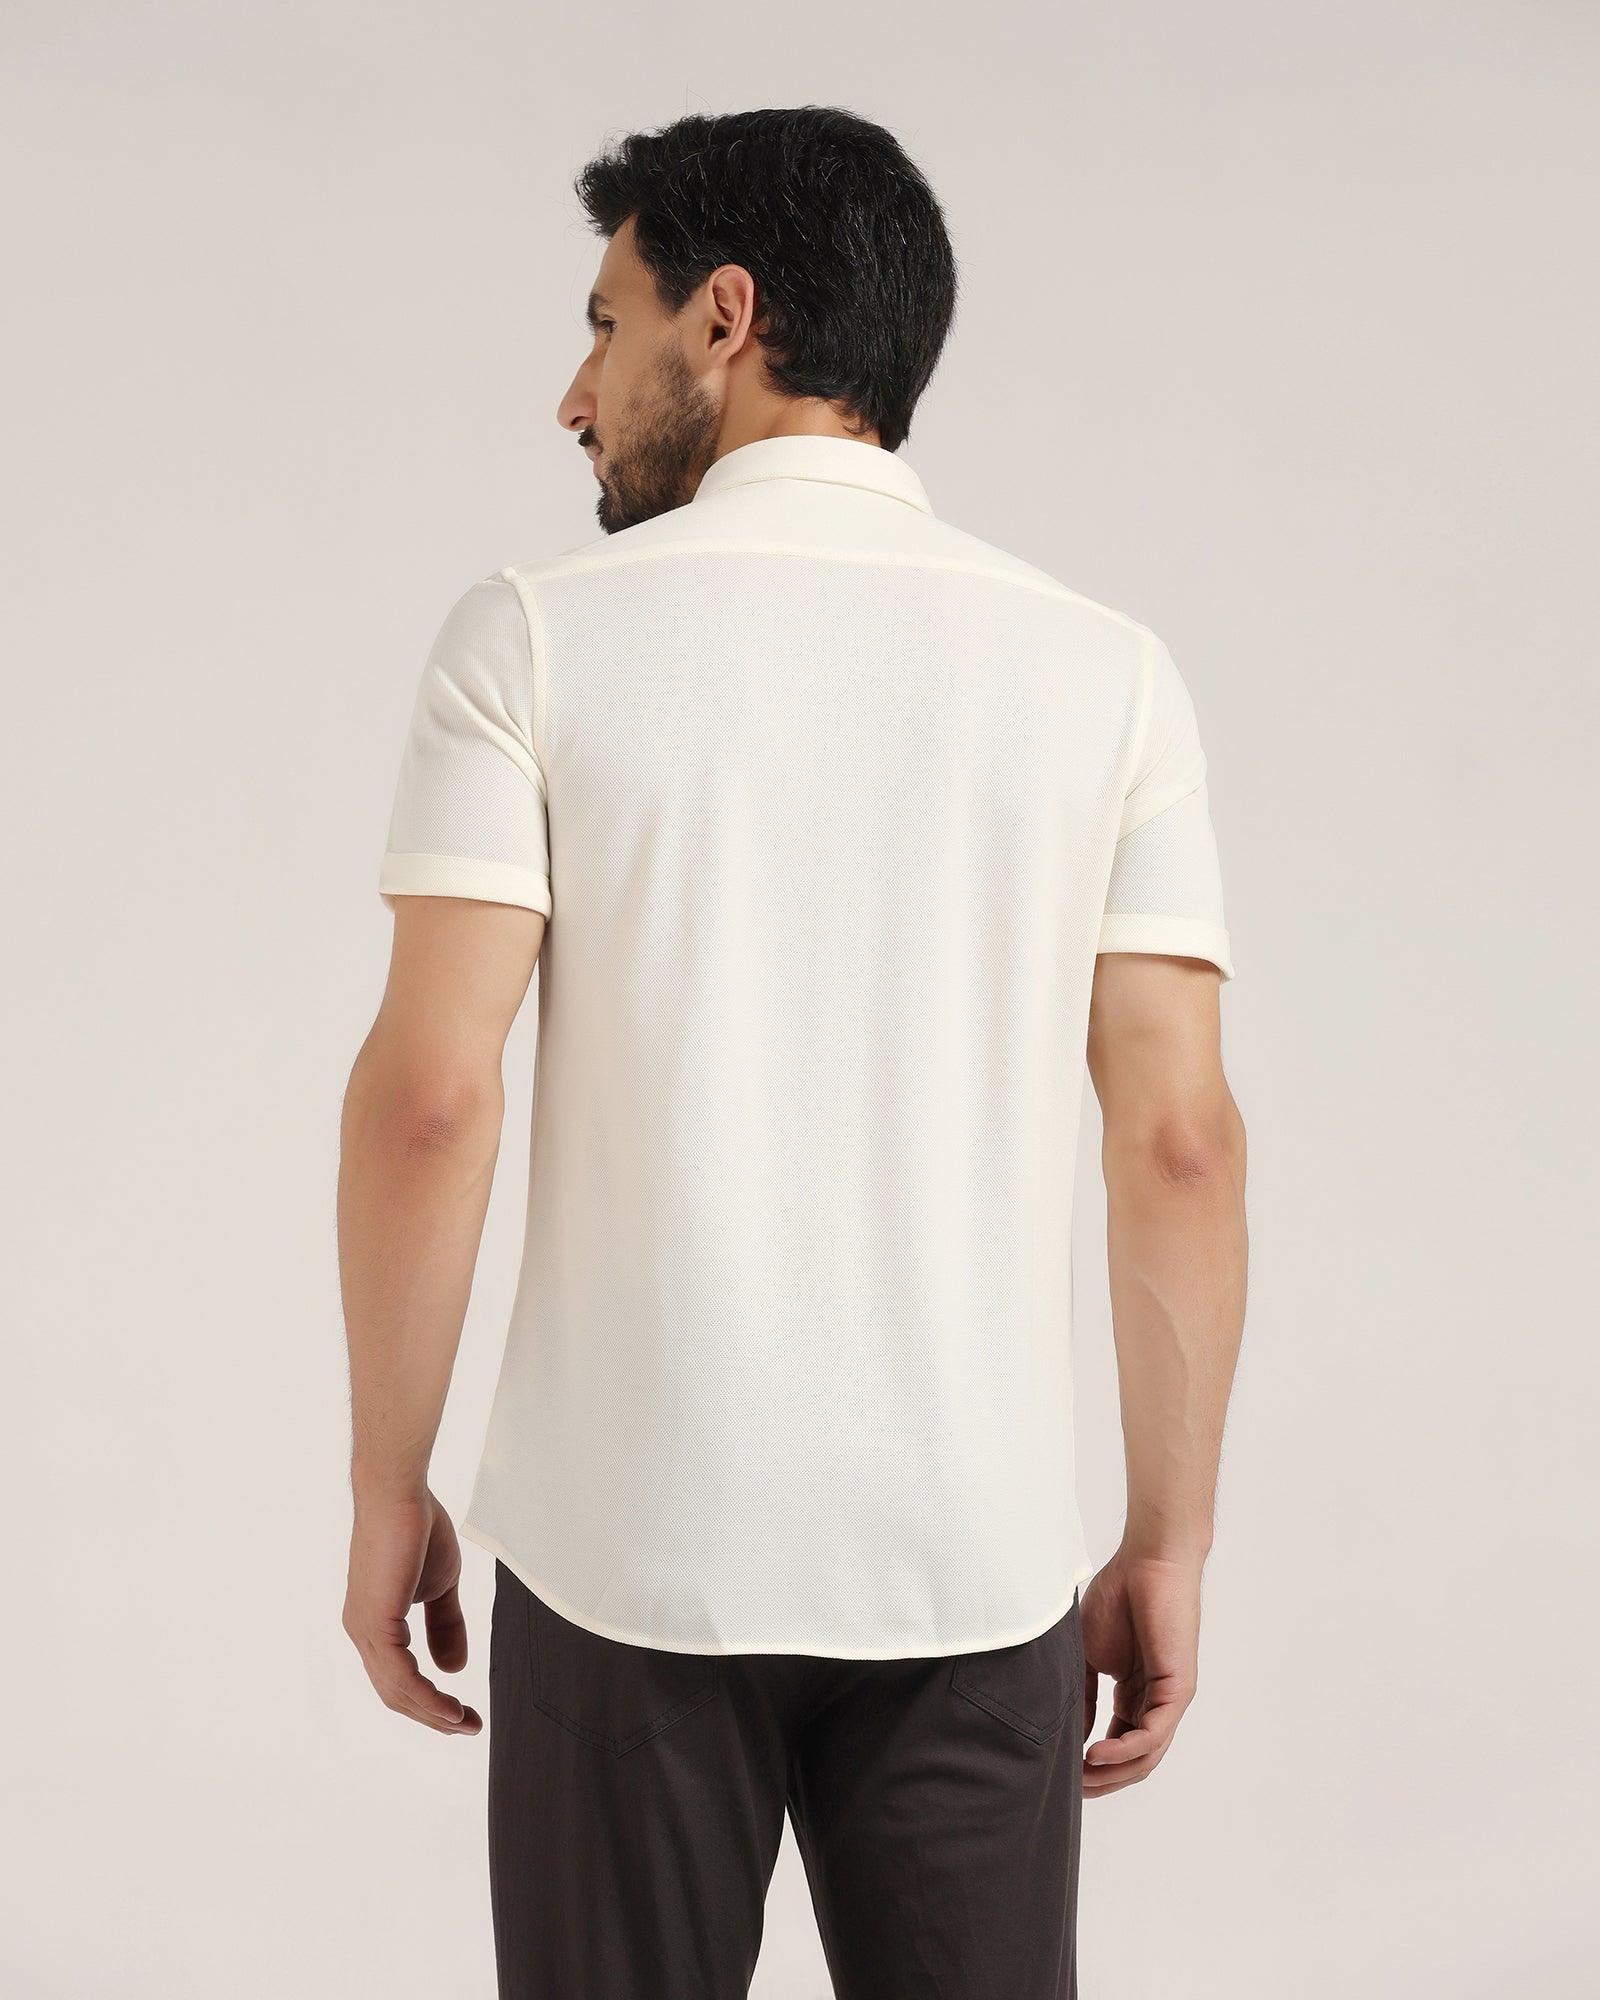 Mens Cotton Vest - Mens Half Sleeves Cotton Vest Manufacturer from  Saharanpur